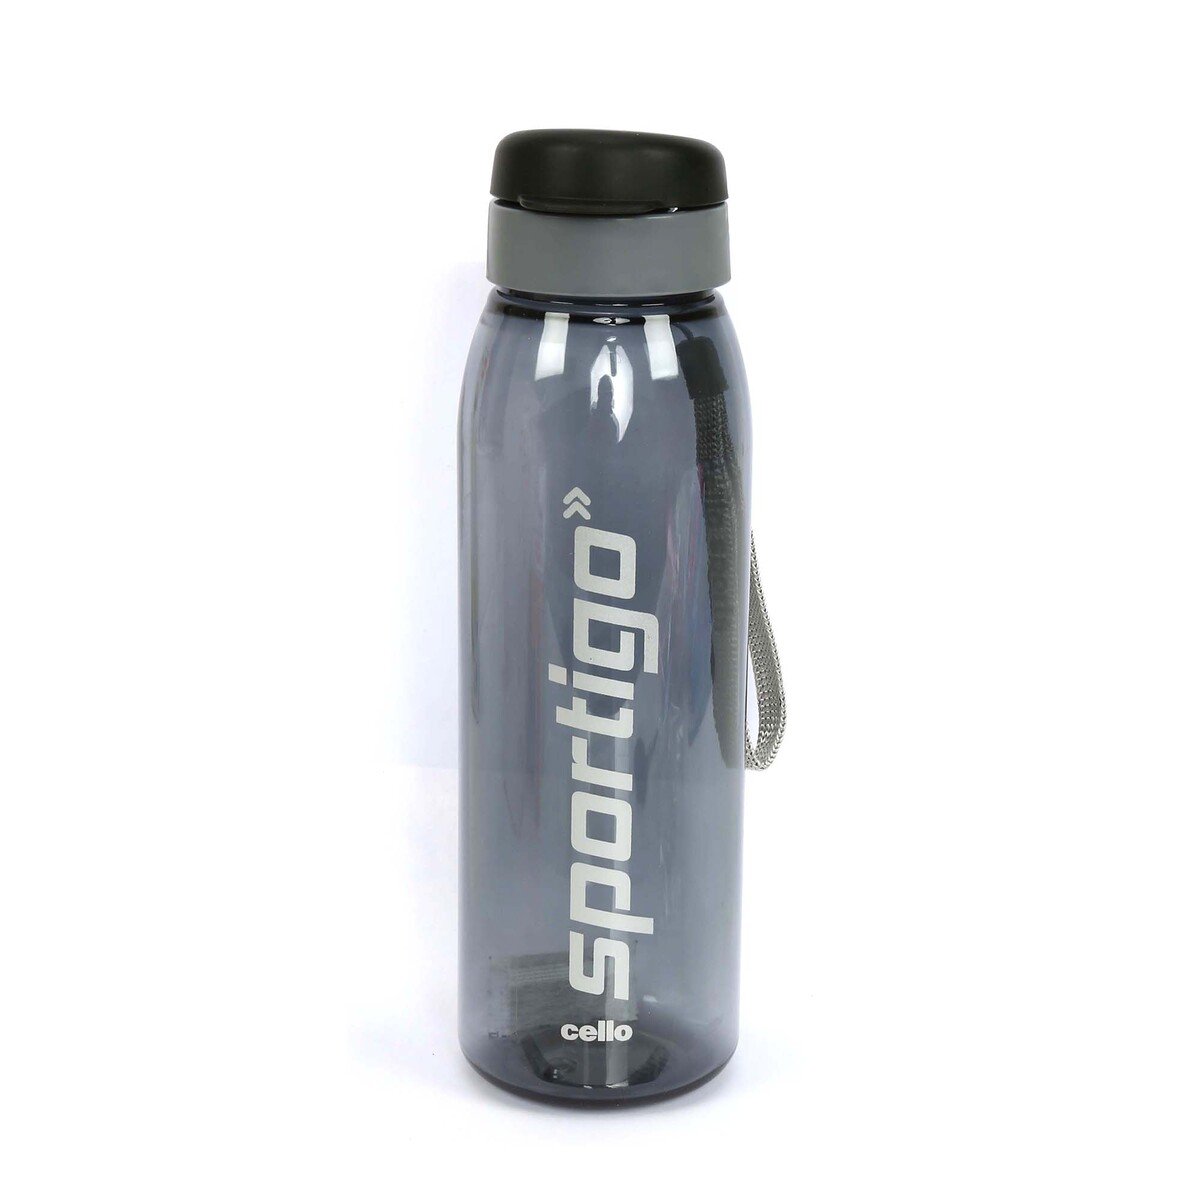 Cello Sportigo Plastic Water Bottle 800ml Assorted